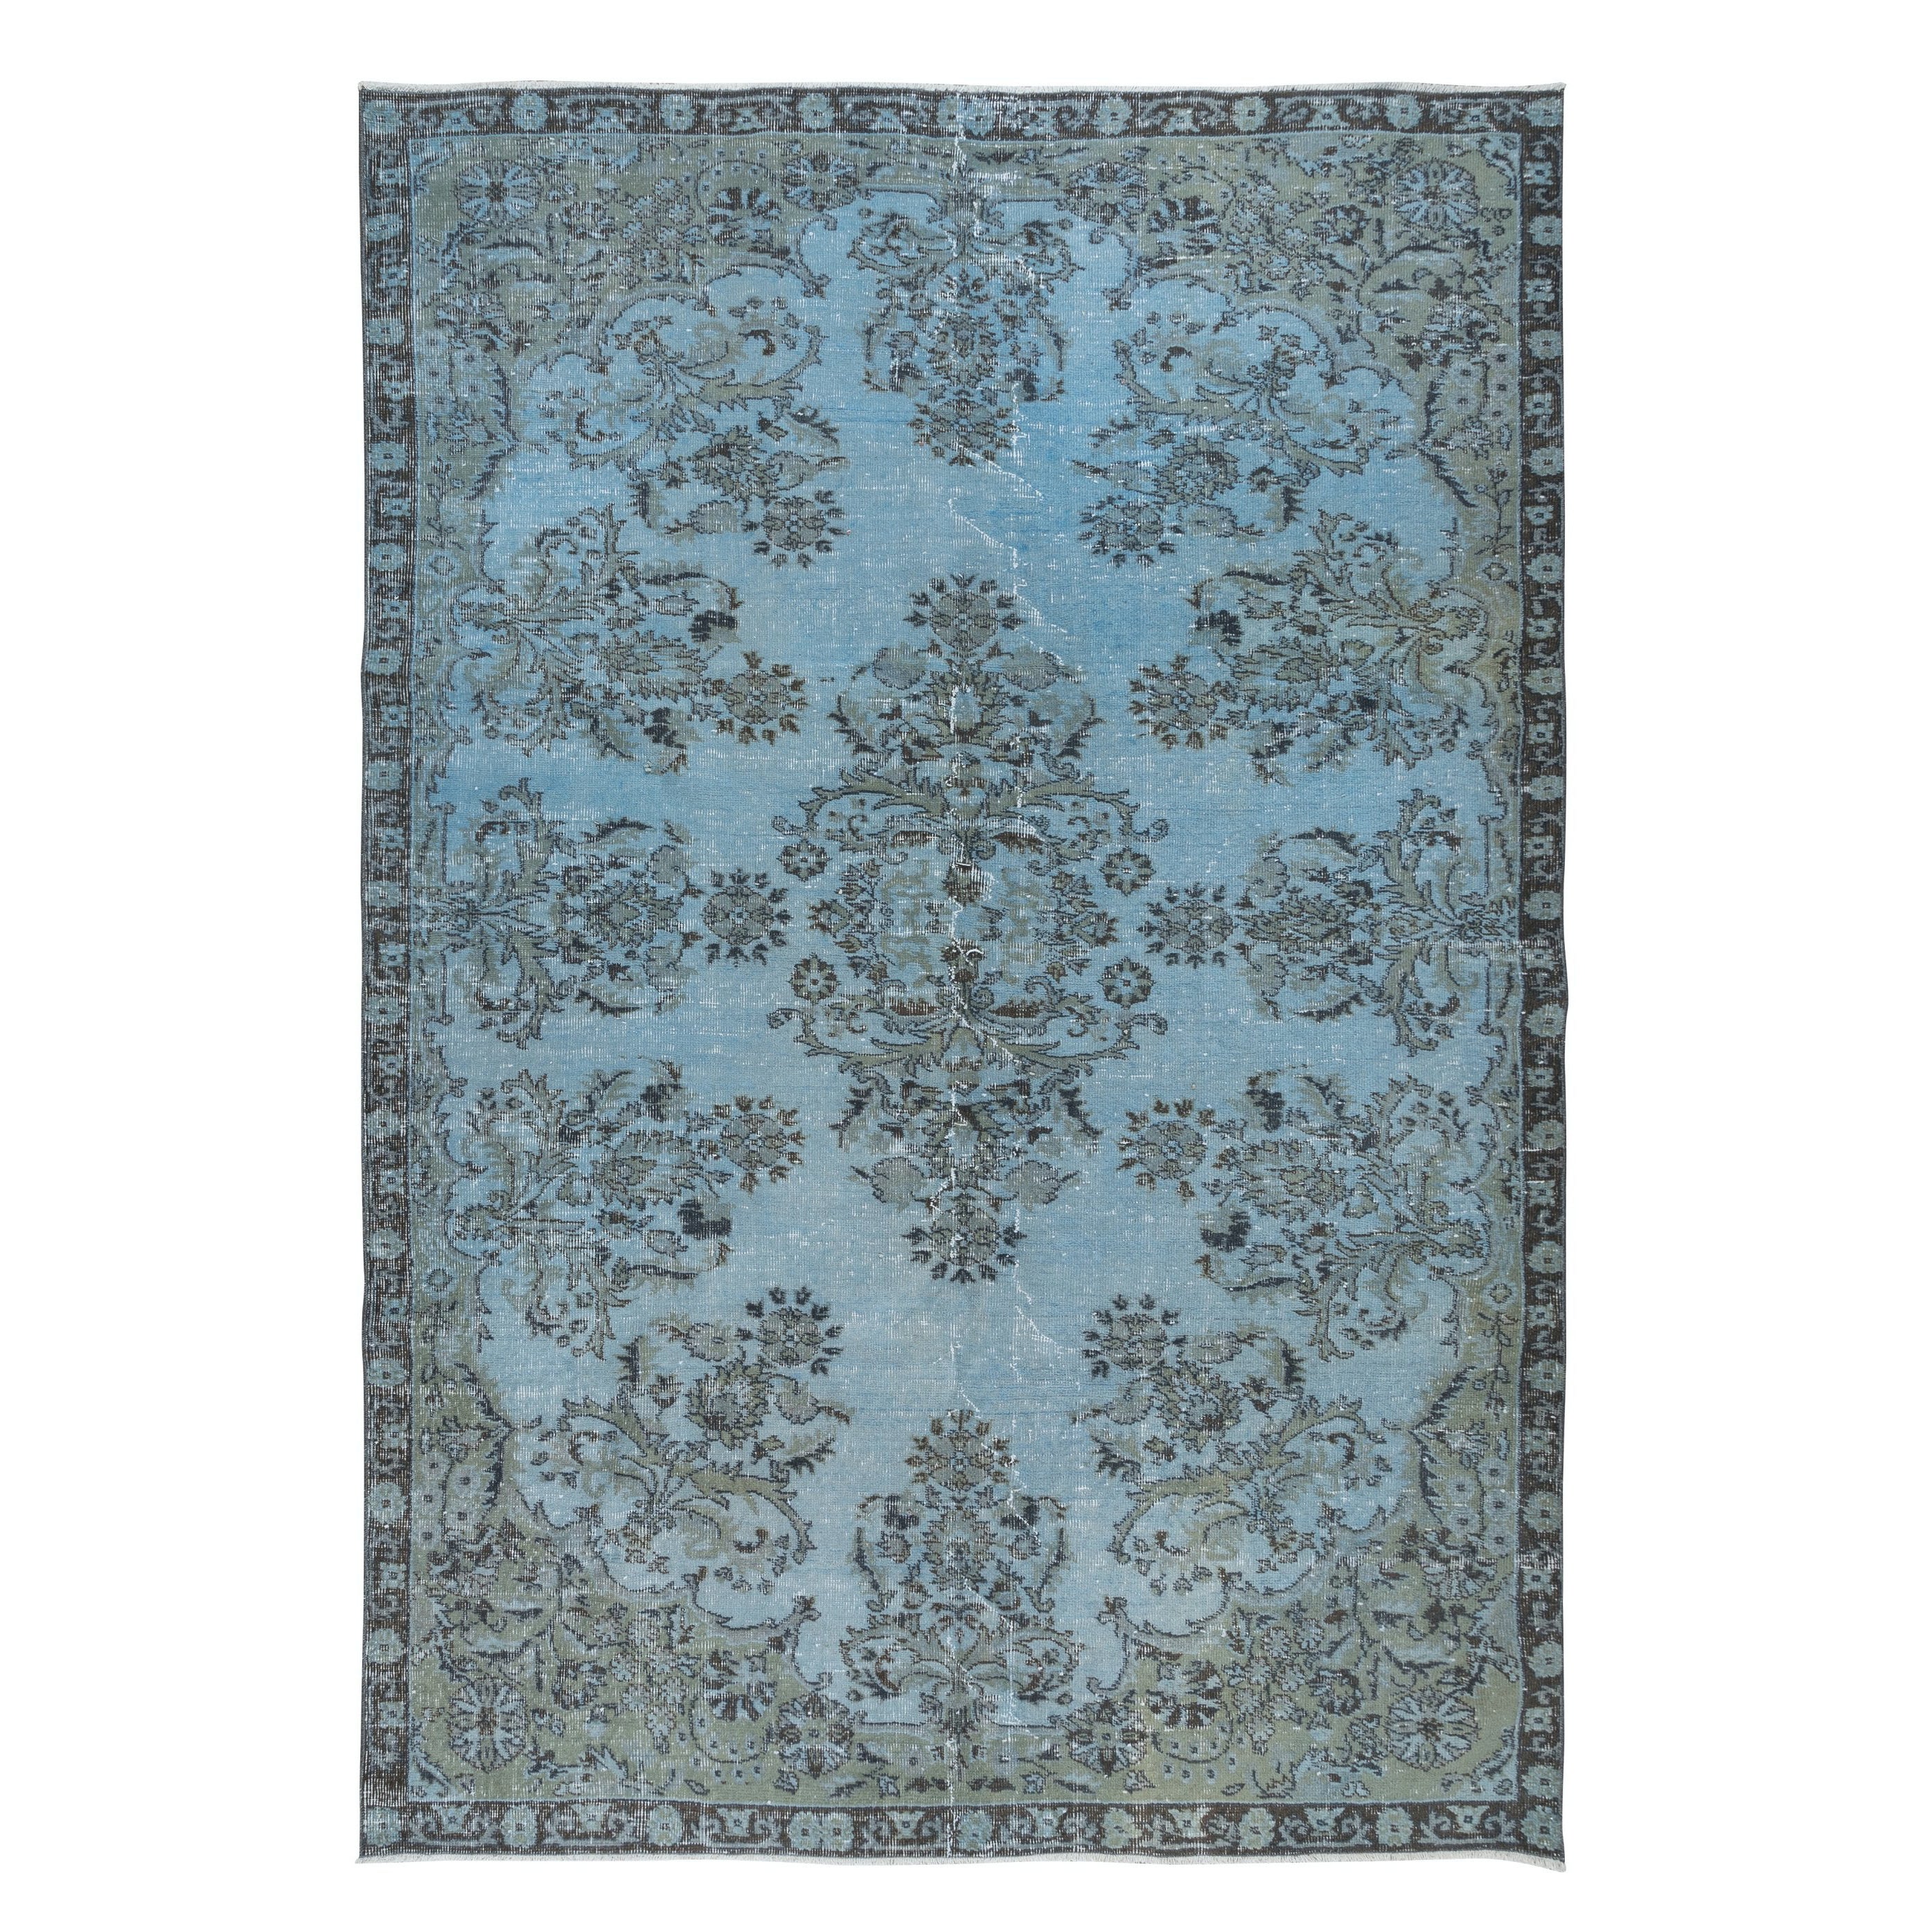 6.4x9.4 Ft Turkish Handmade Floral Rug in Light Blue, Modern Sky Blue Carpet